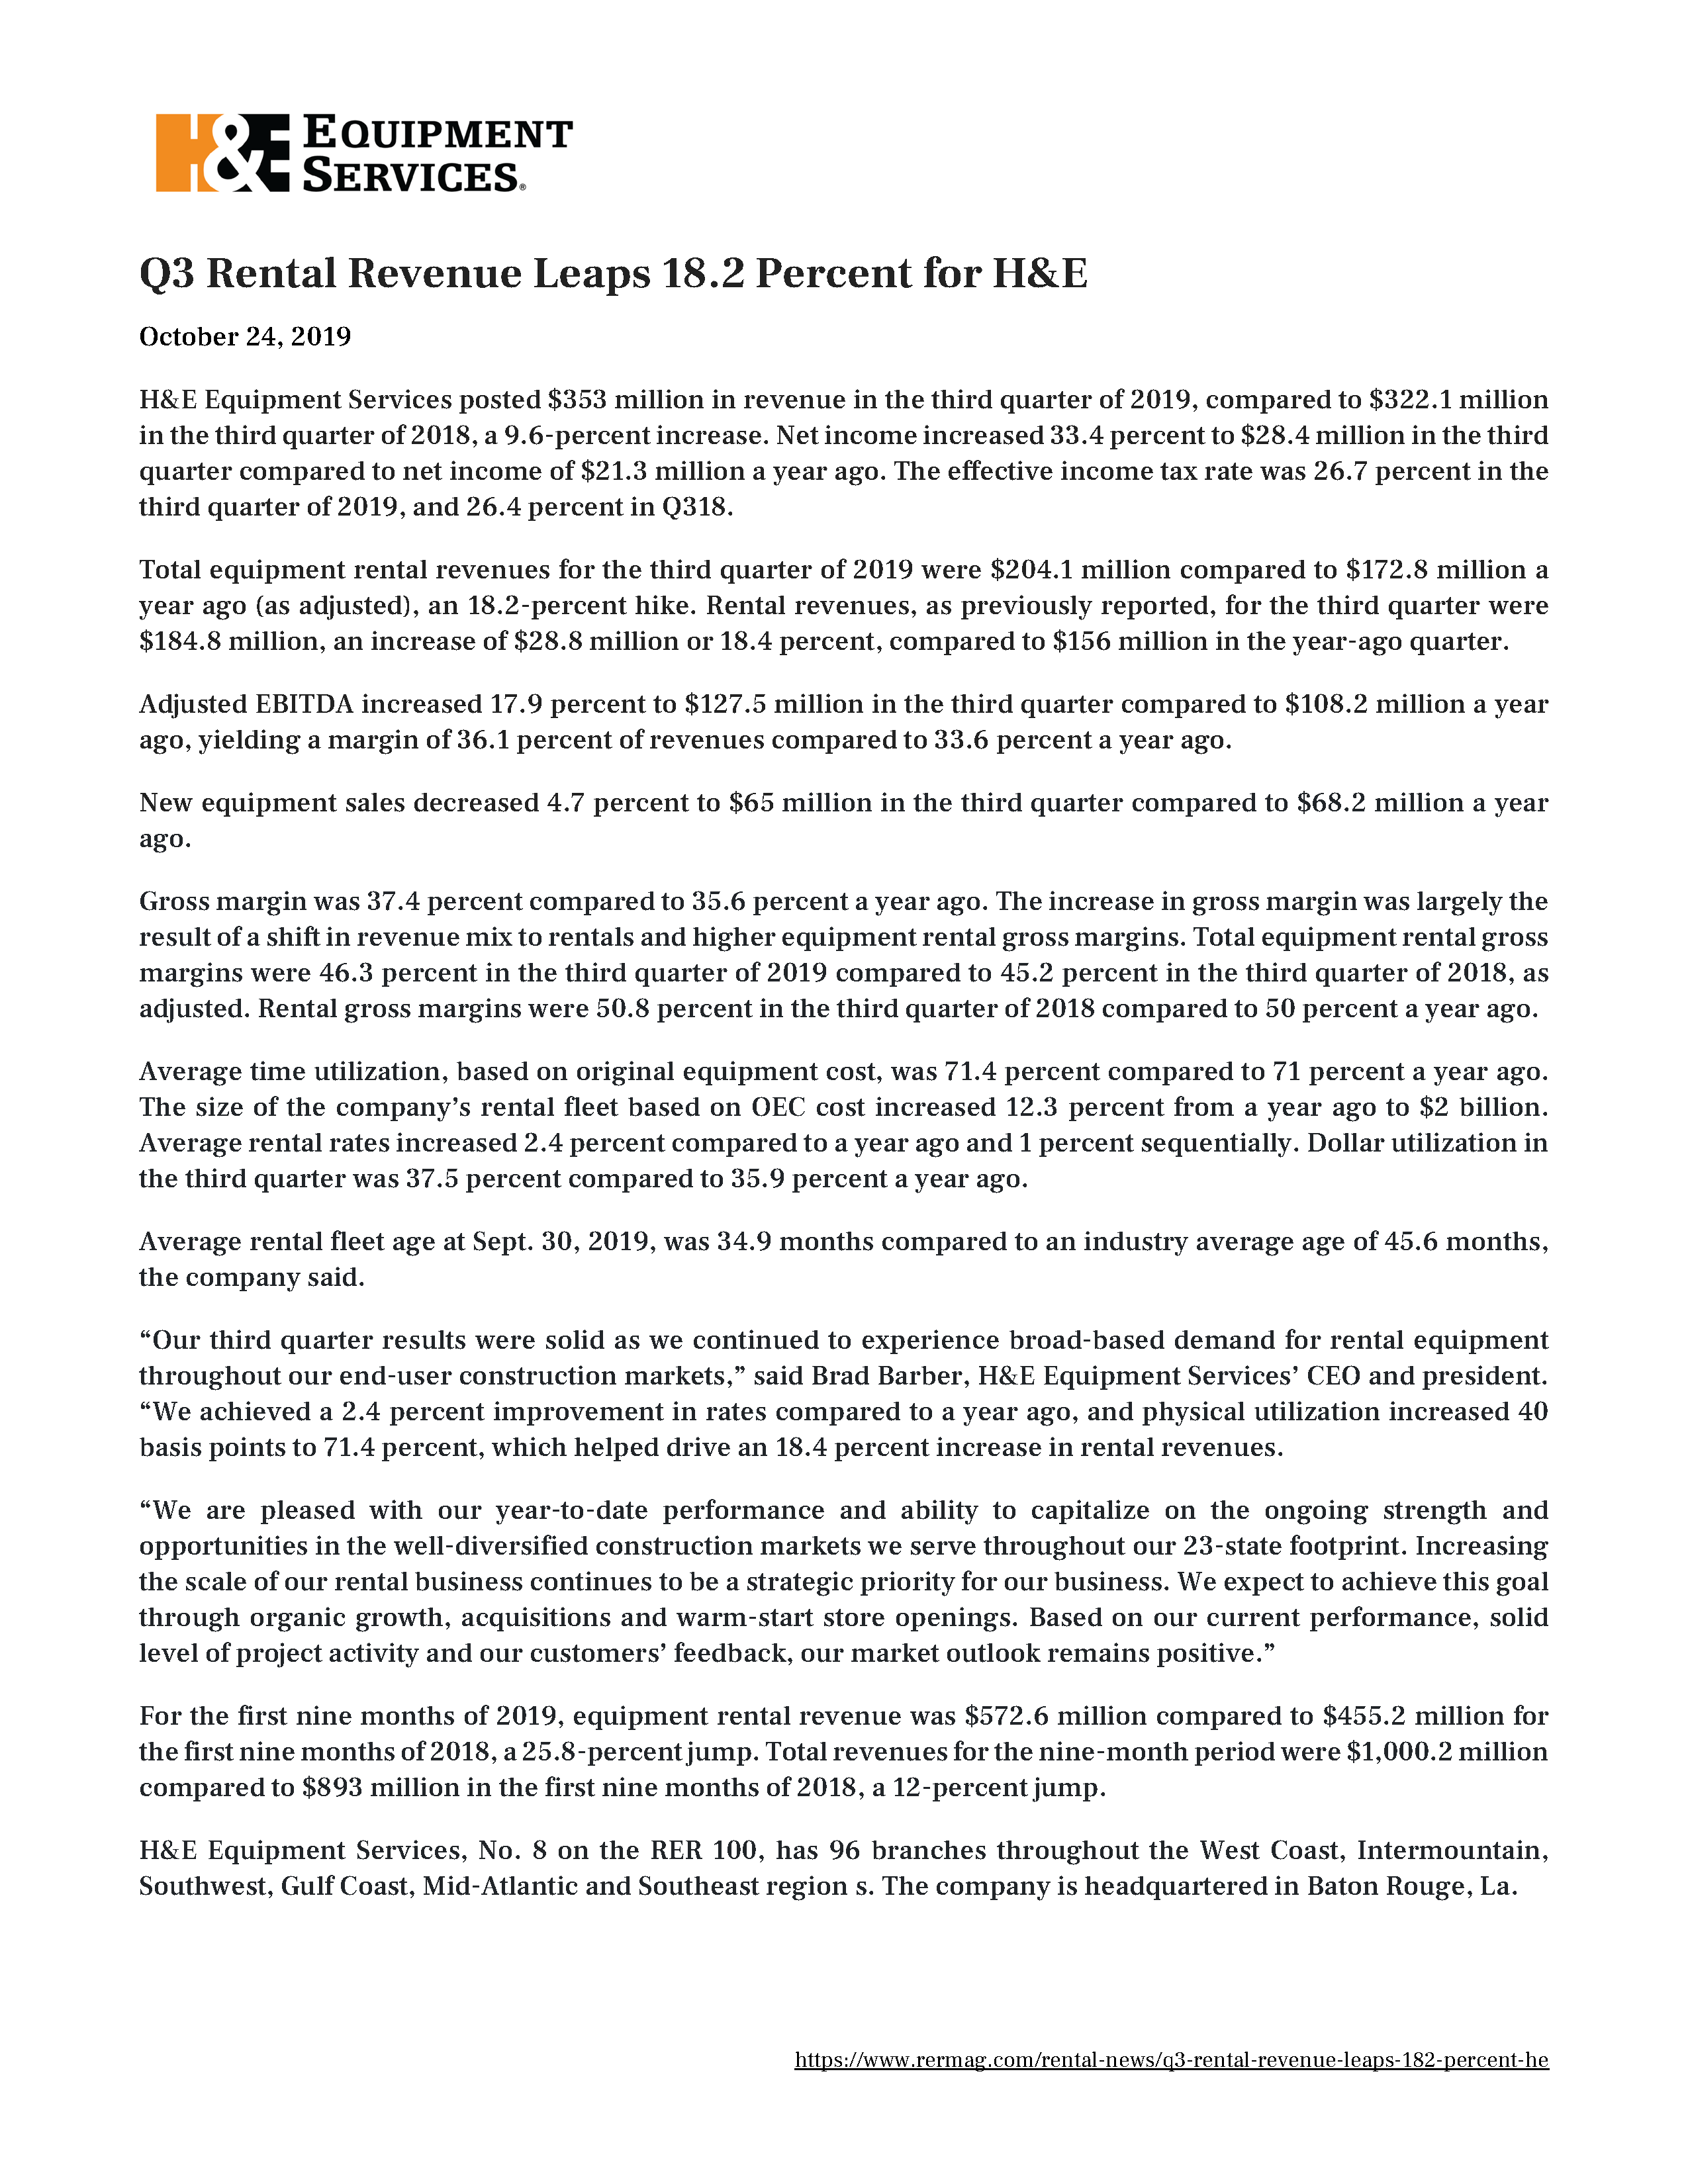 Q3 Rental Revenue Leaps 18.25 Percent for H&E 10.24.2019